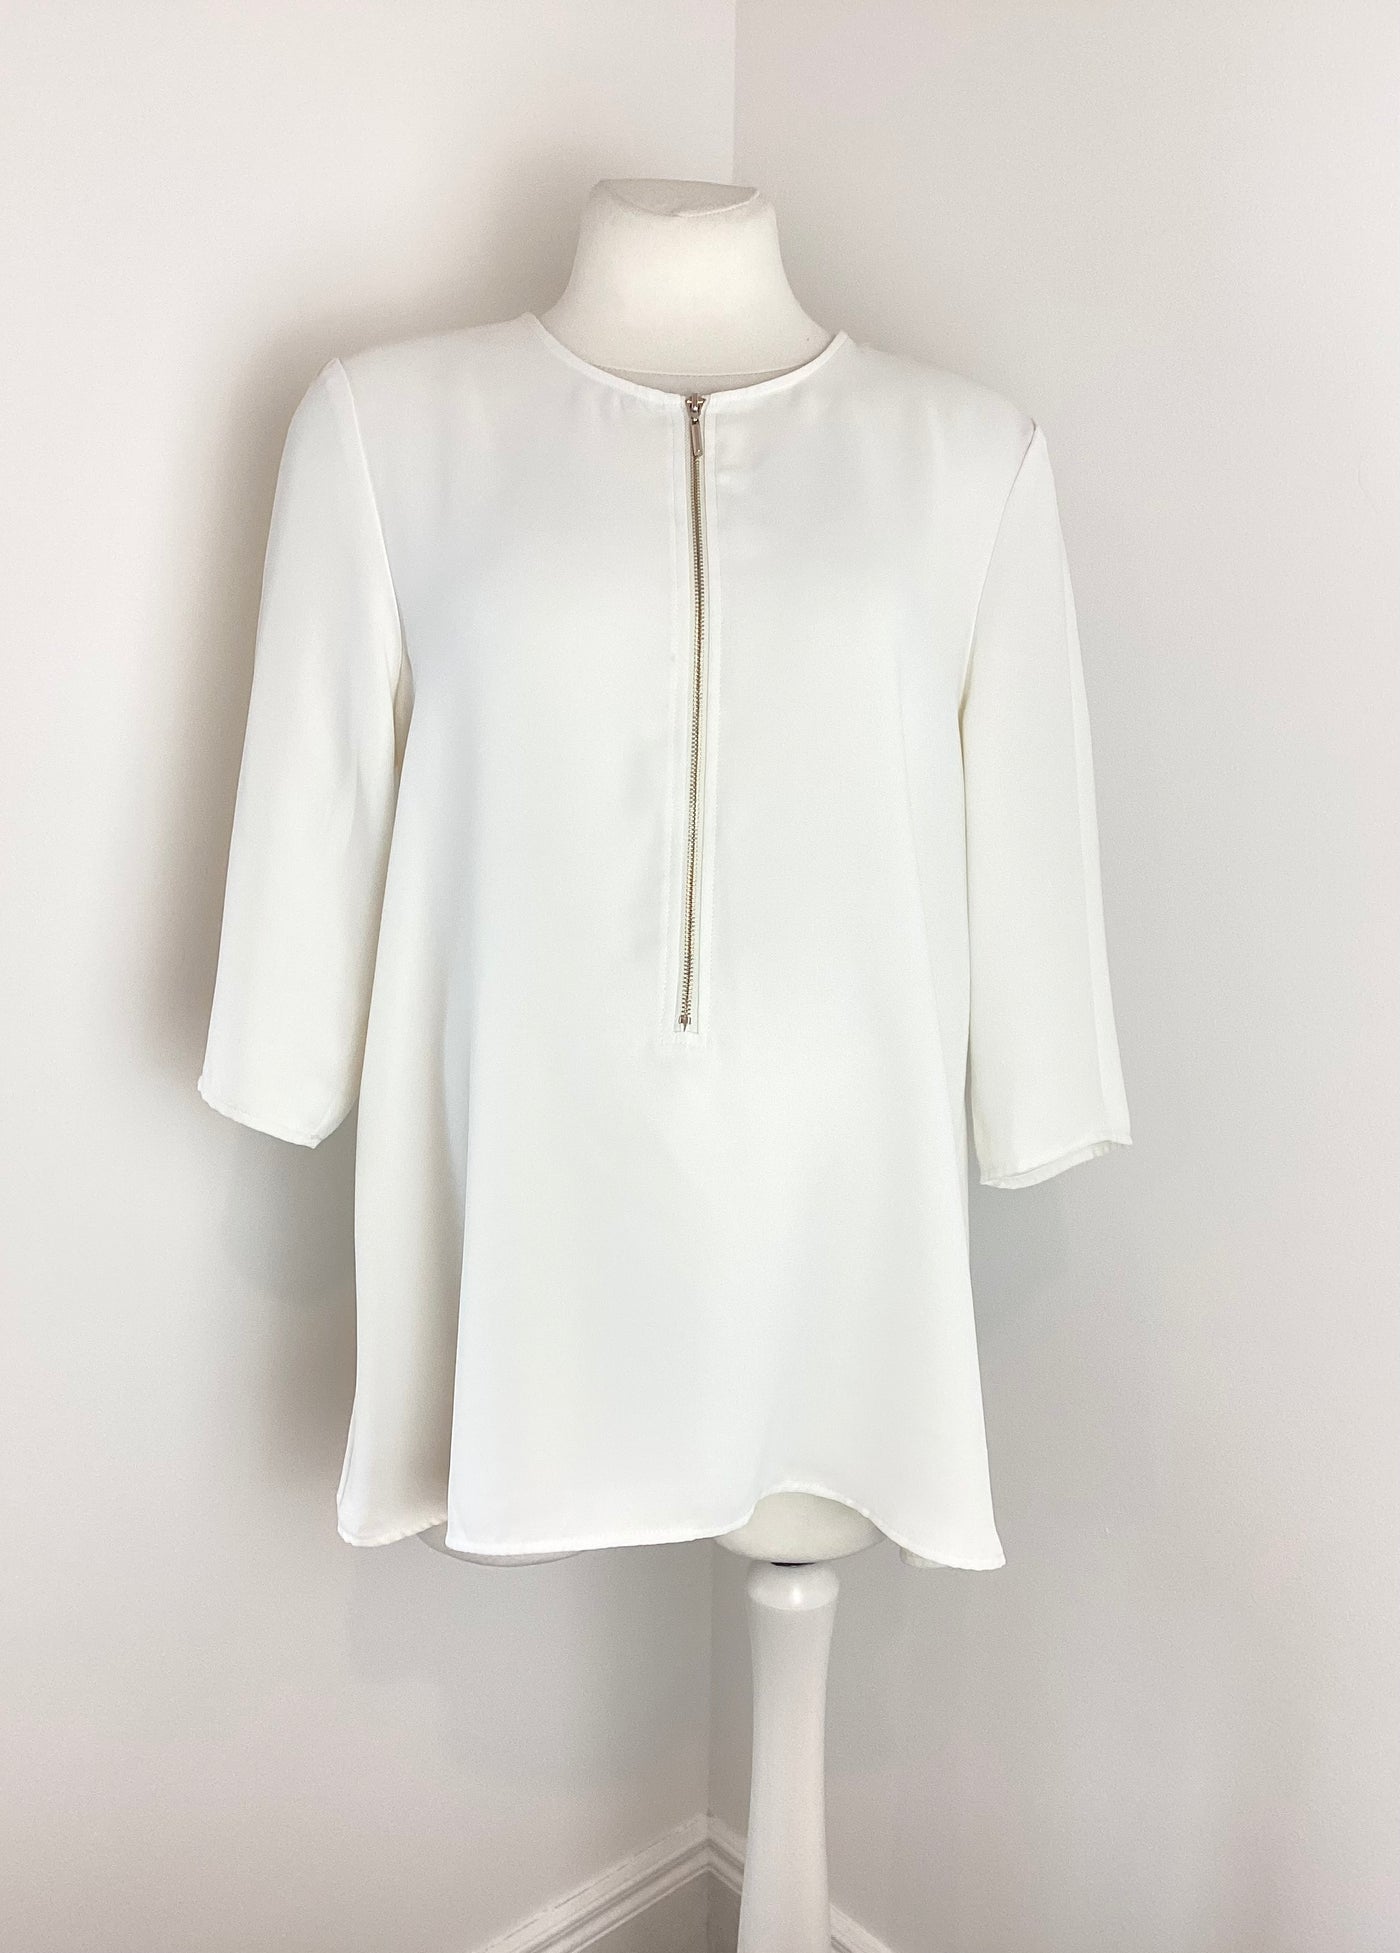 Zara Woman cream  3/4 sleeve zip top - Size L (Approx UK 12/14)